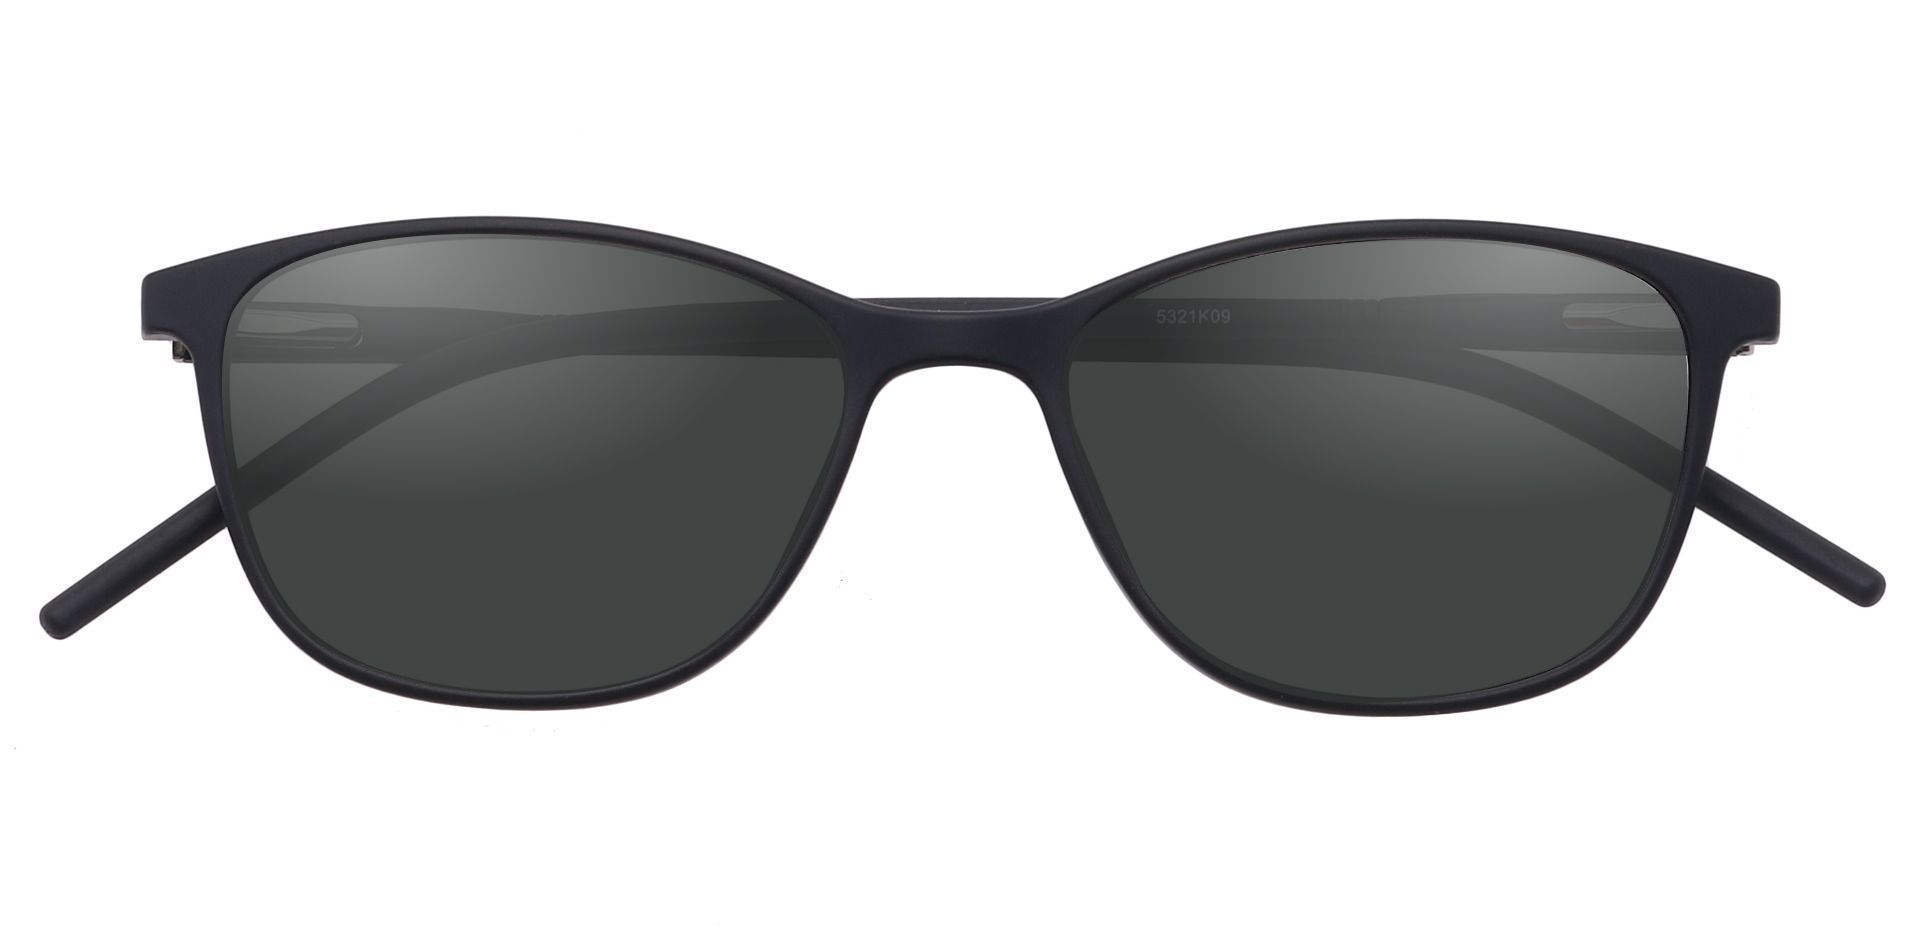 Hazel Square Progressive Sunglasses -  Black Frame With Gray Lenses